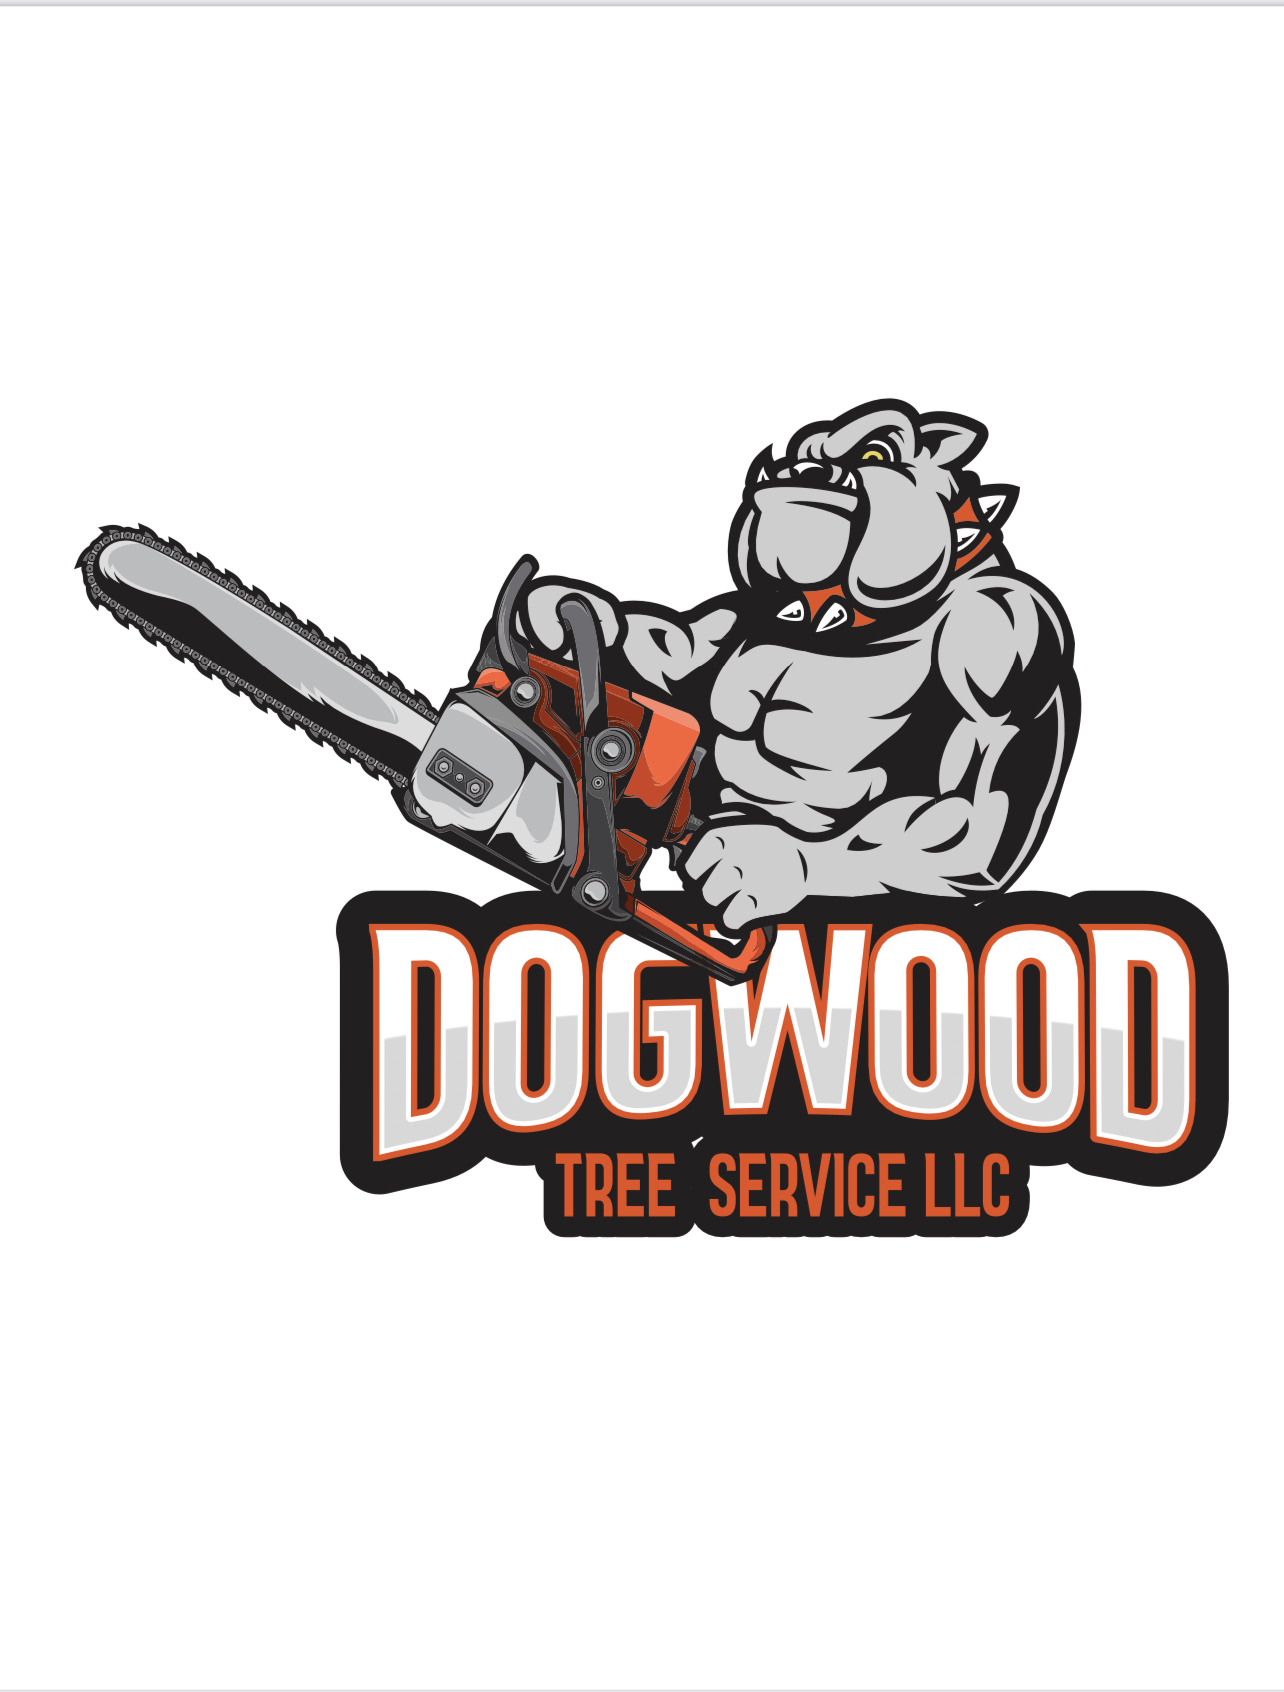 Dogwood Tree Service LLC